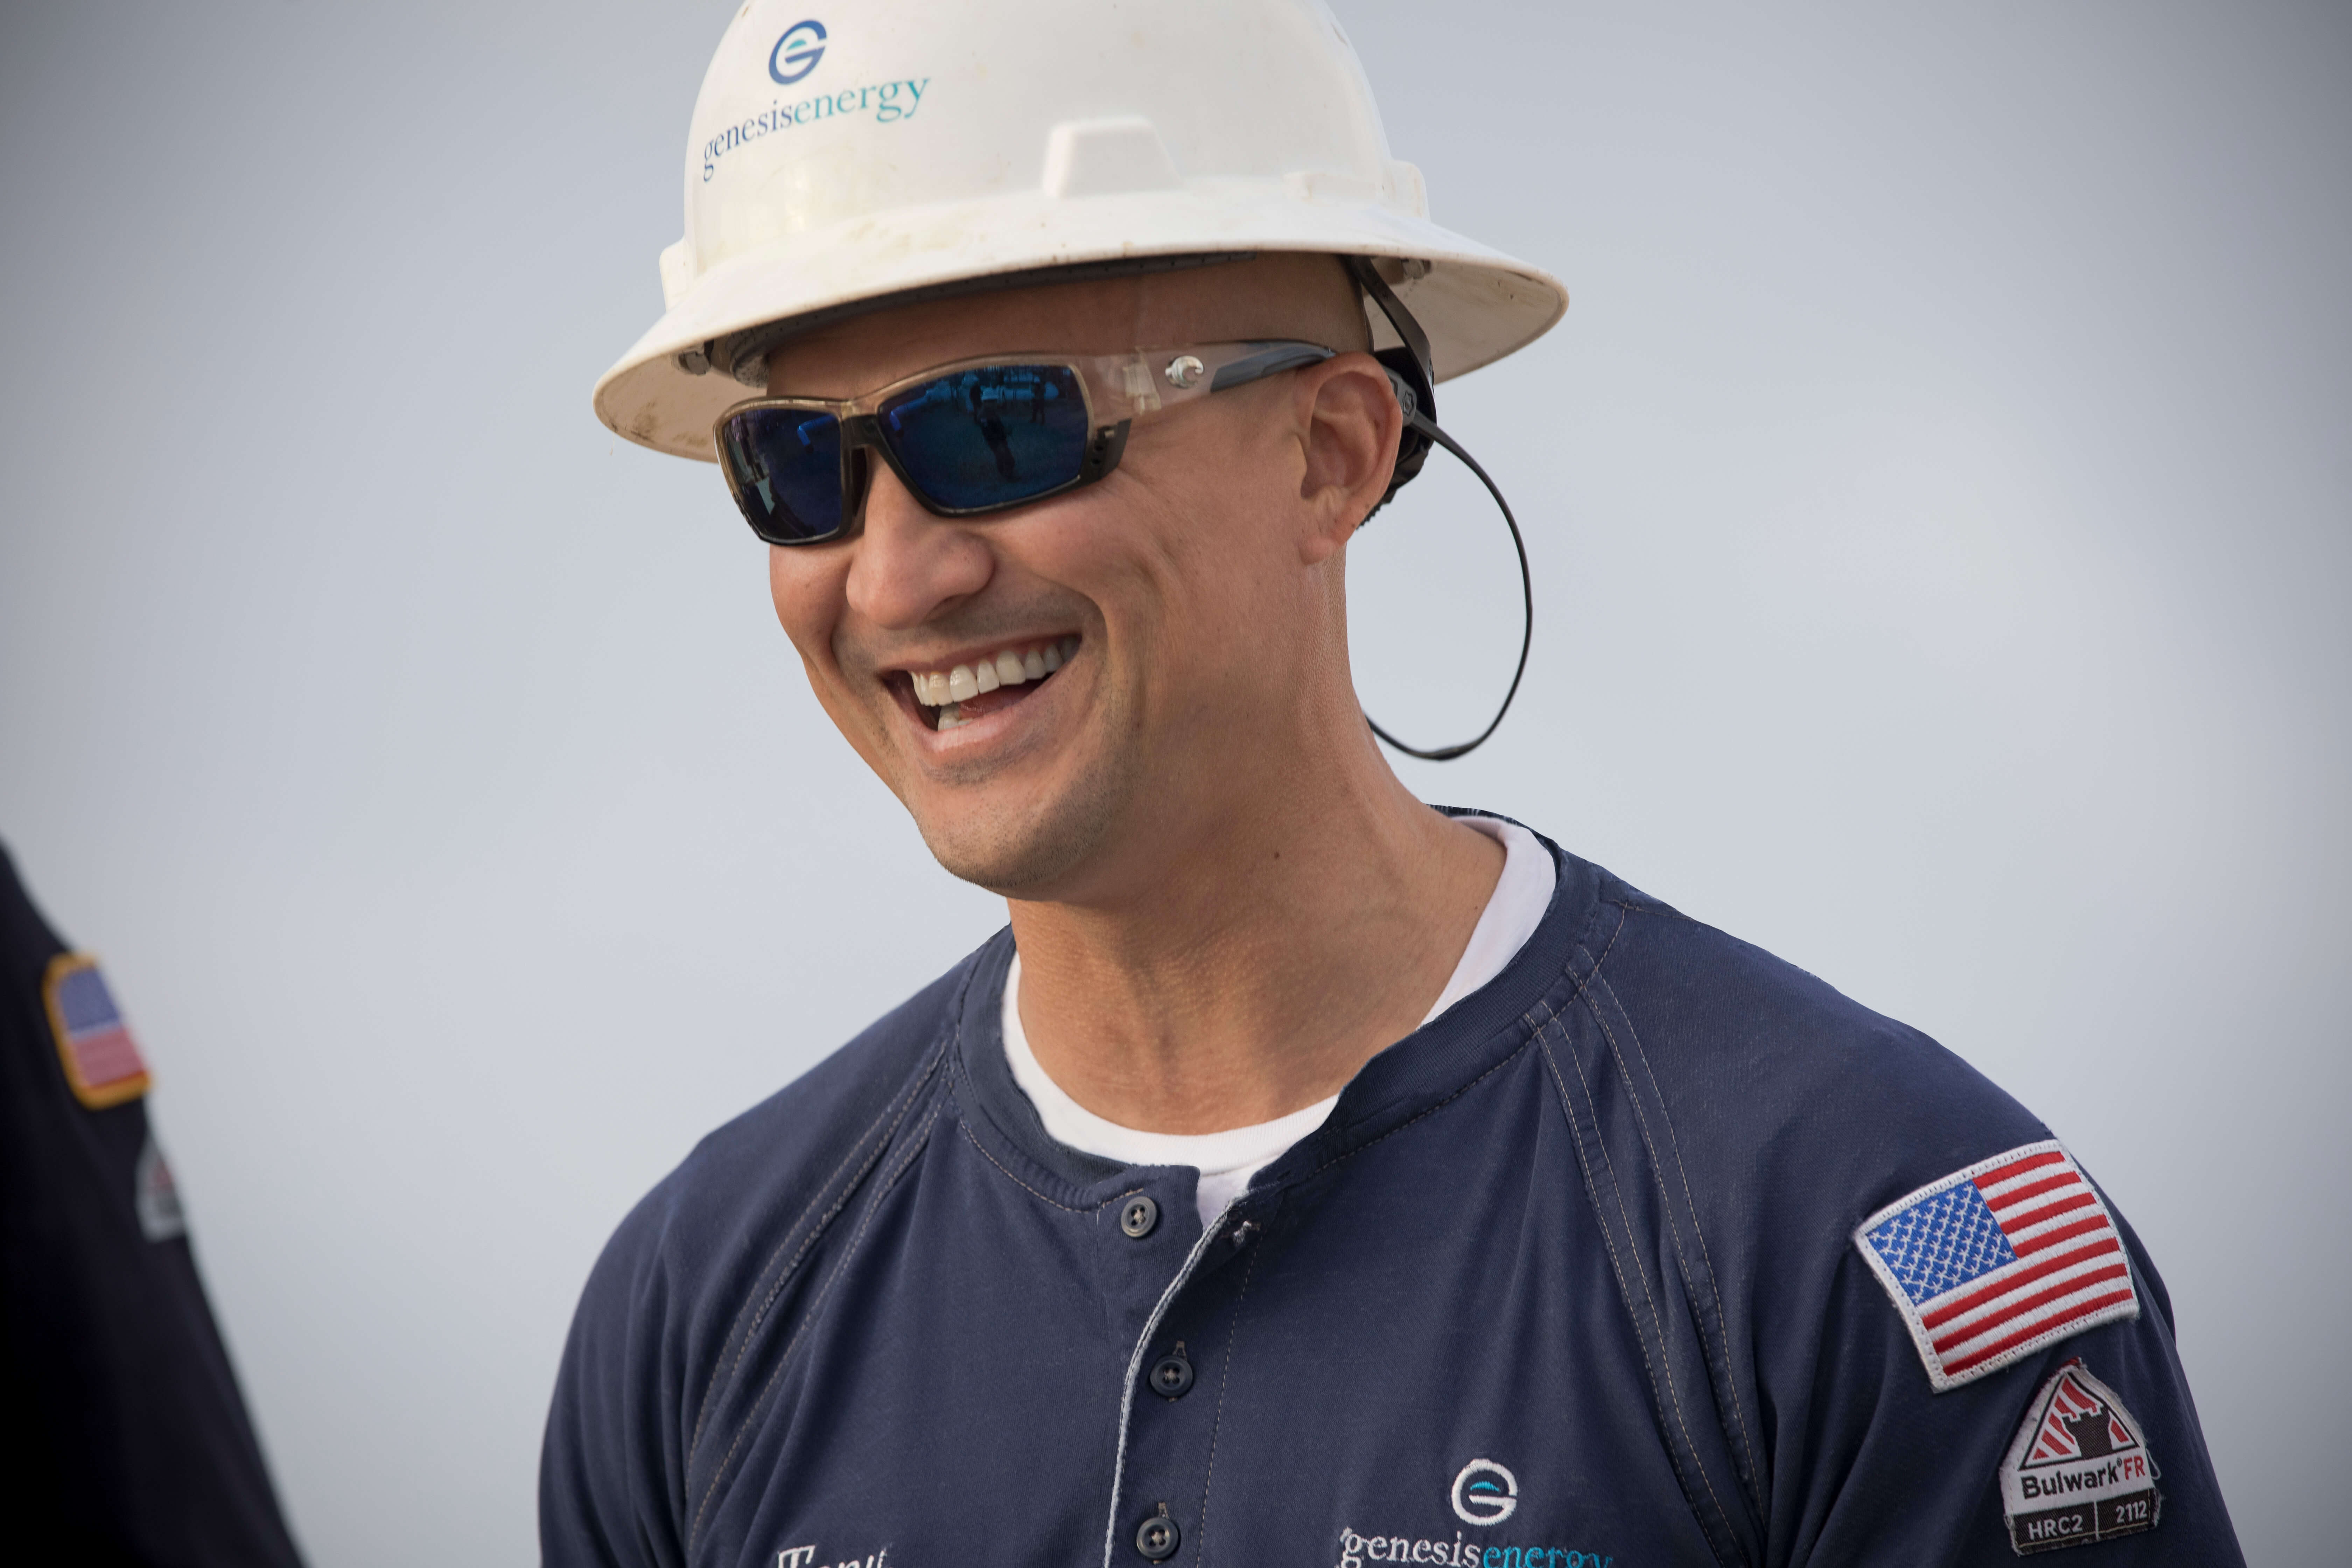 Smiling male Genesis Energy employee